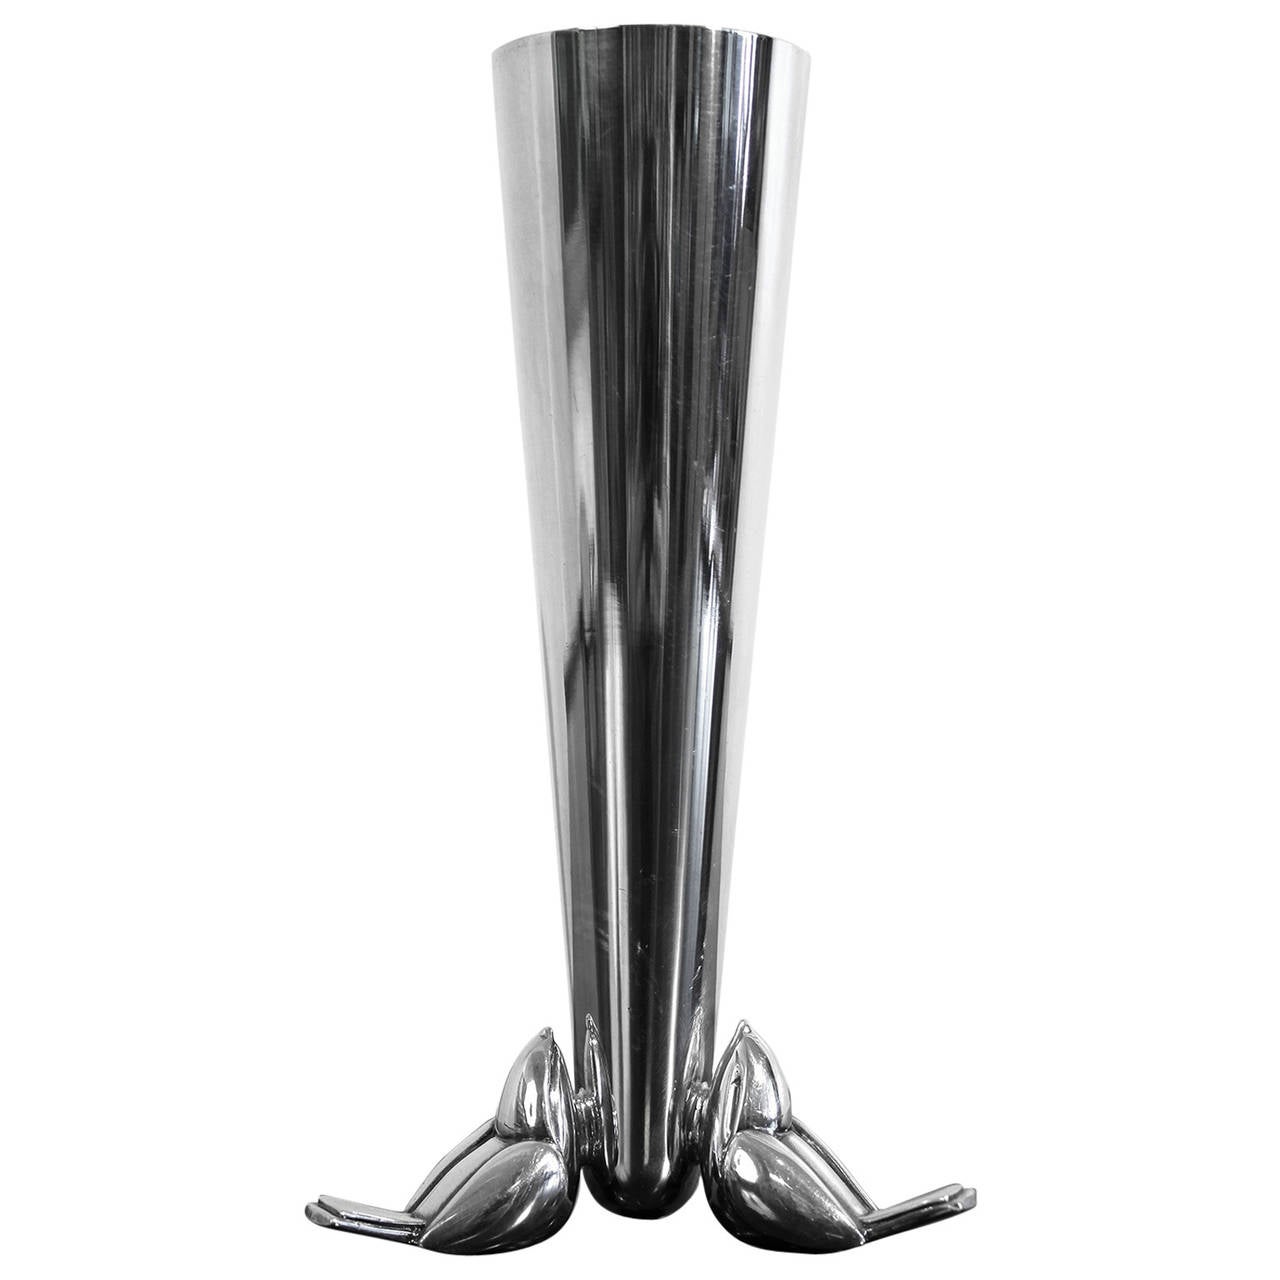 Christofle Silver Plate Bud Vase